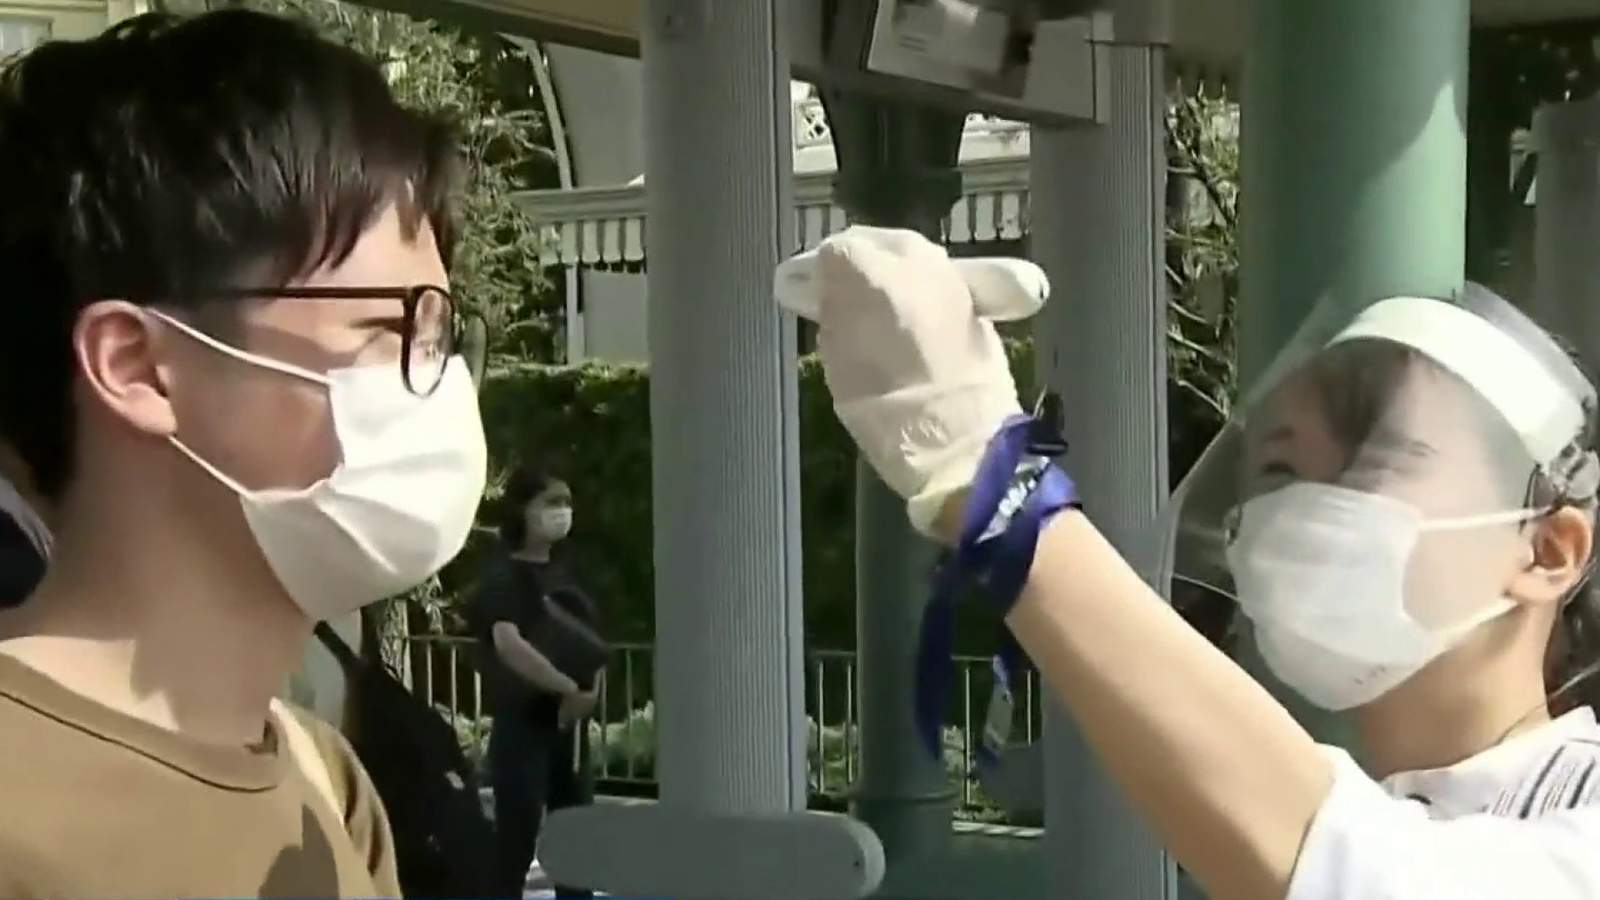 Tokyo Disney Resort reopens amid pandemic. Walt Disney World is next